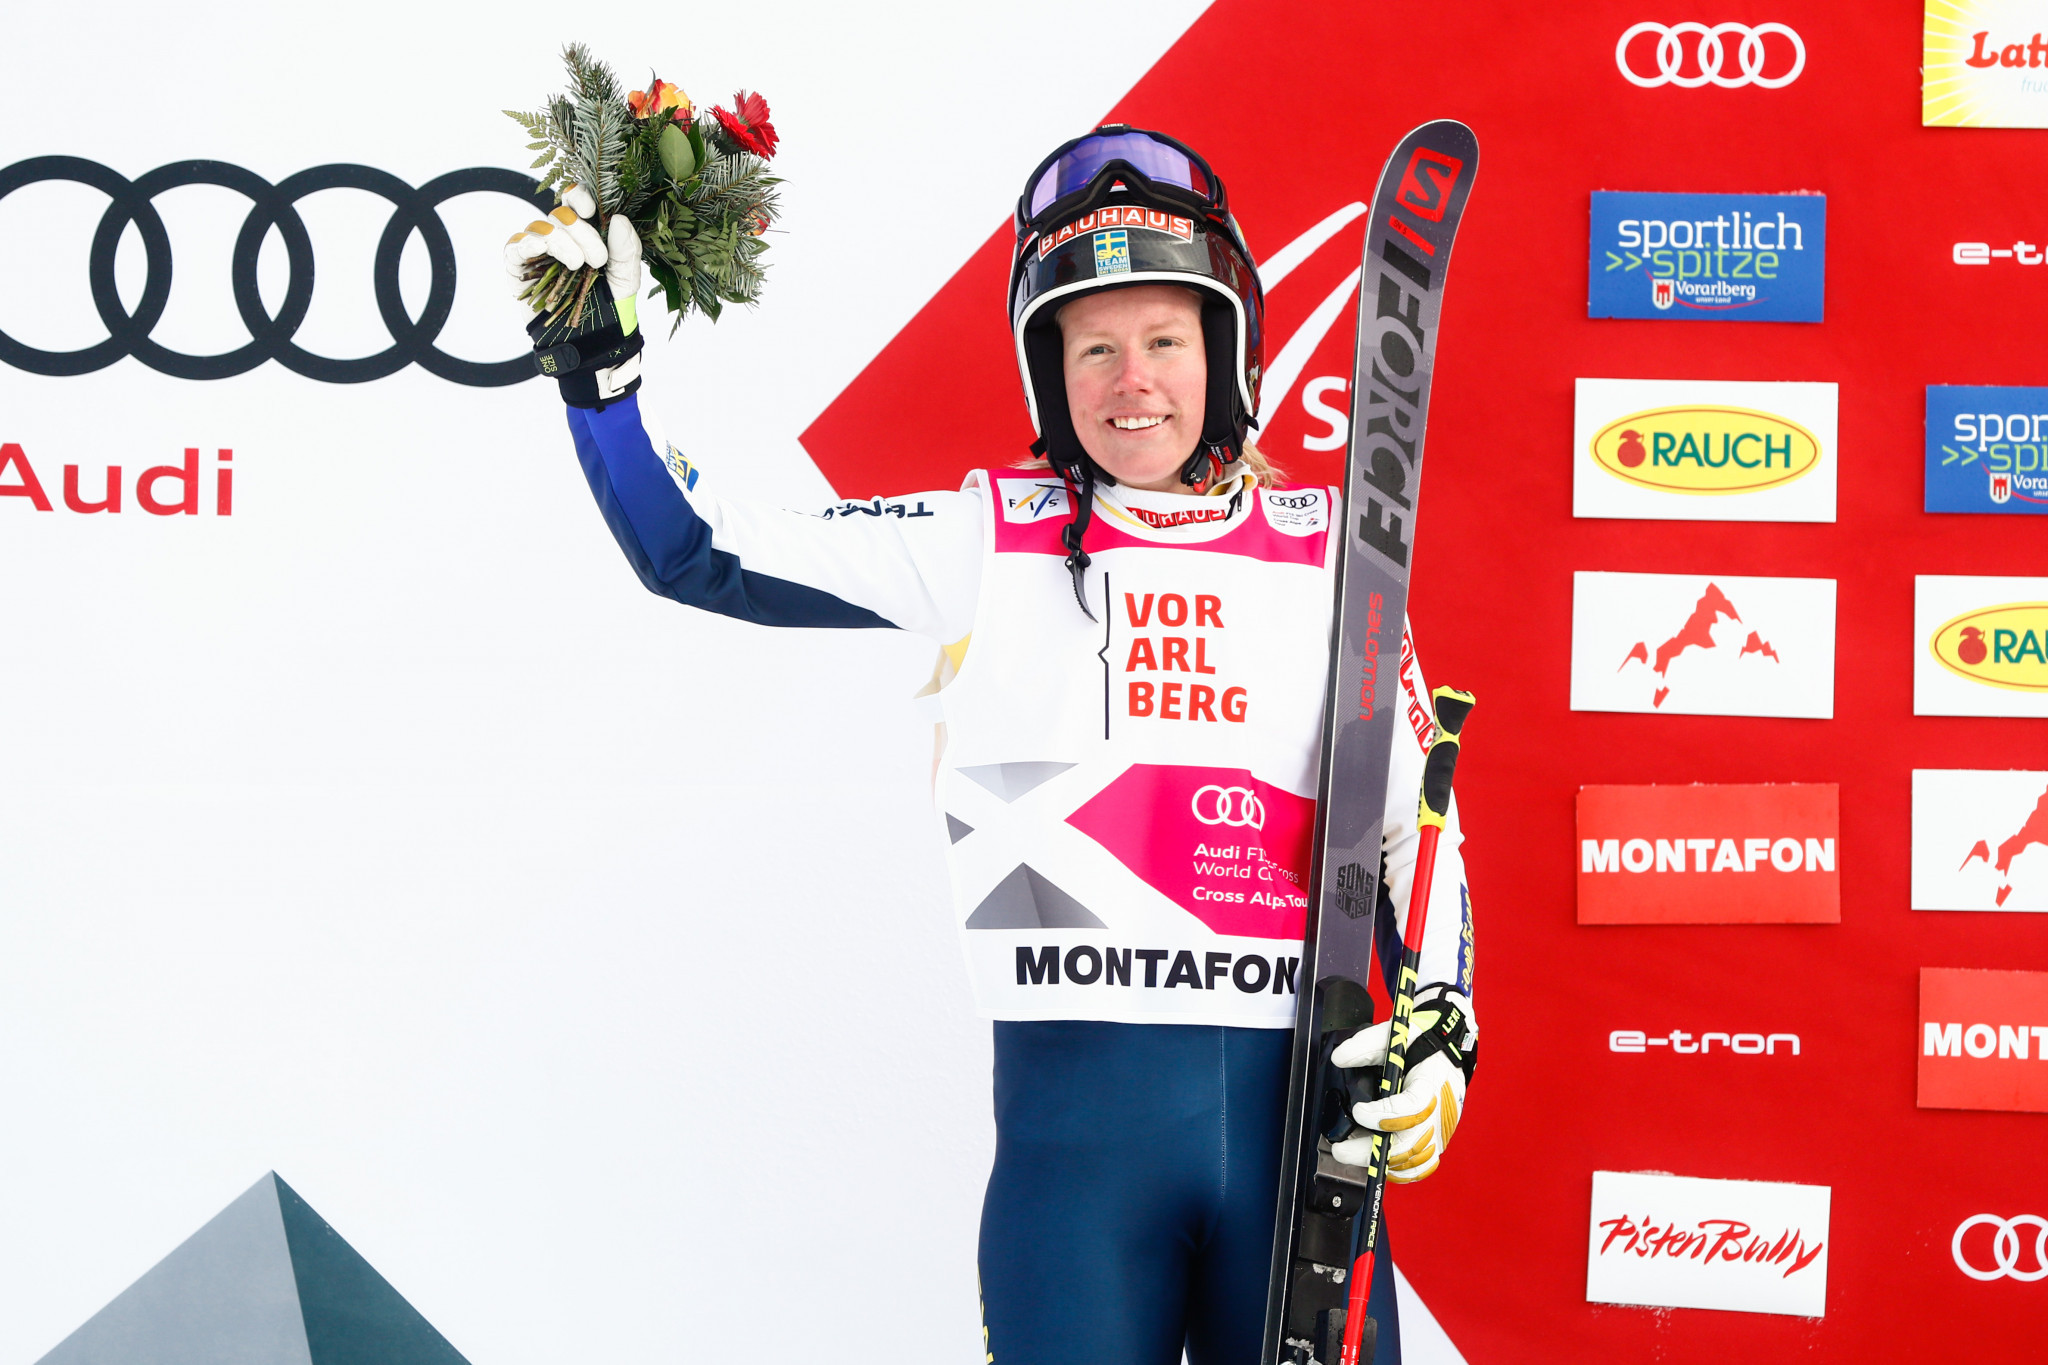 Swedish Ski Association confirm alpine and ski cross training groups